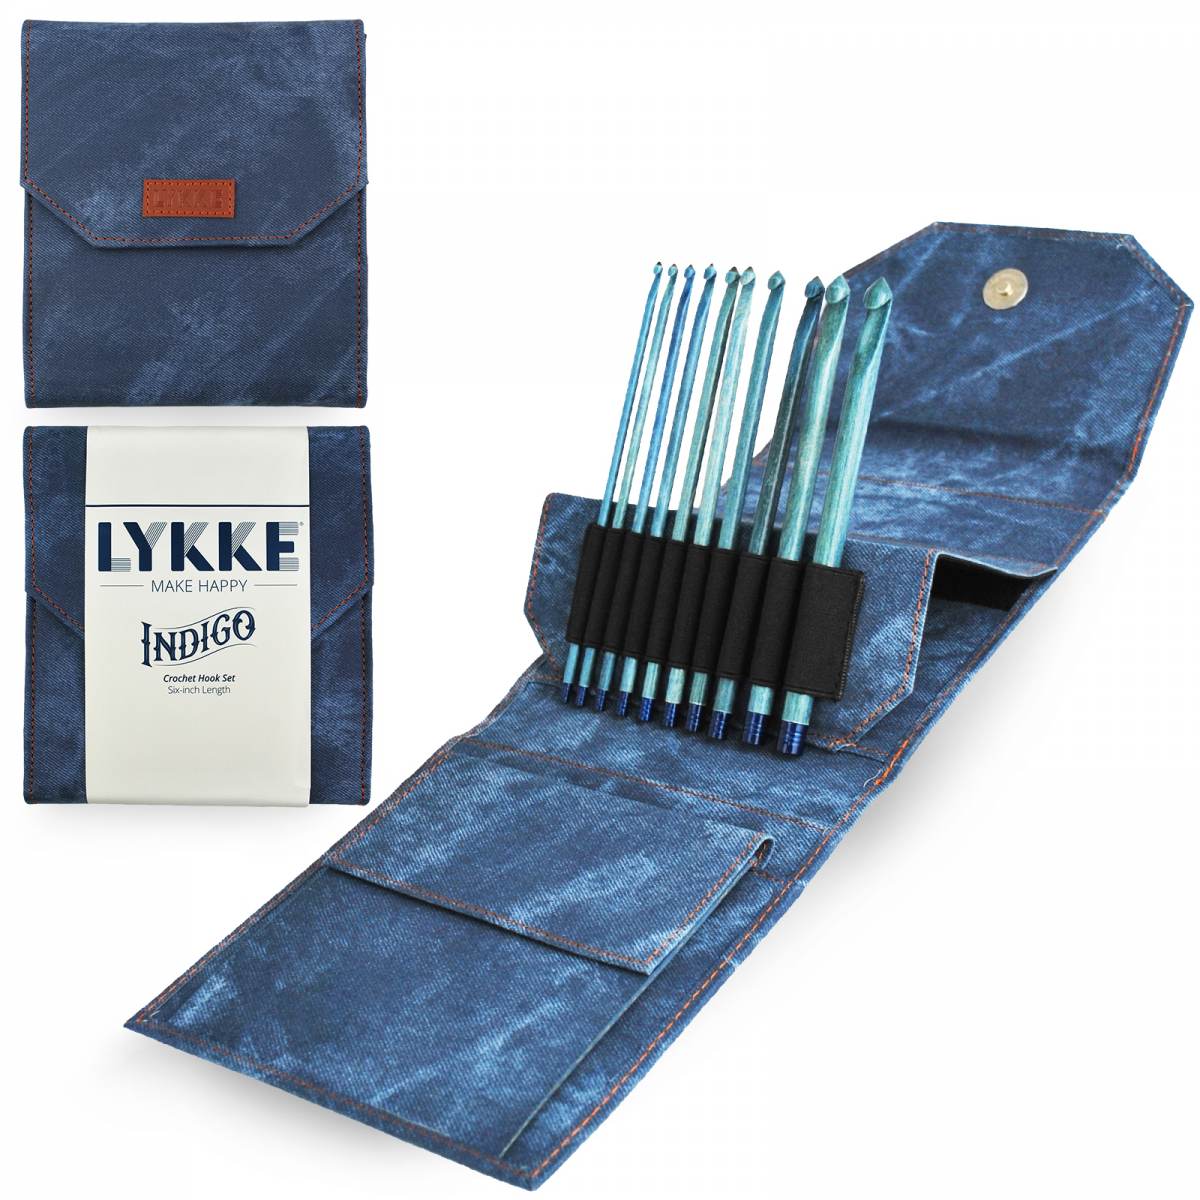 LYKKE Driftwood Crochet Hook Sets